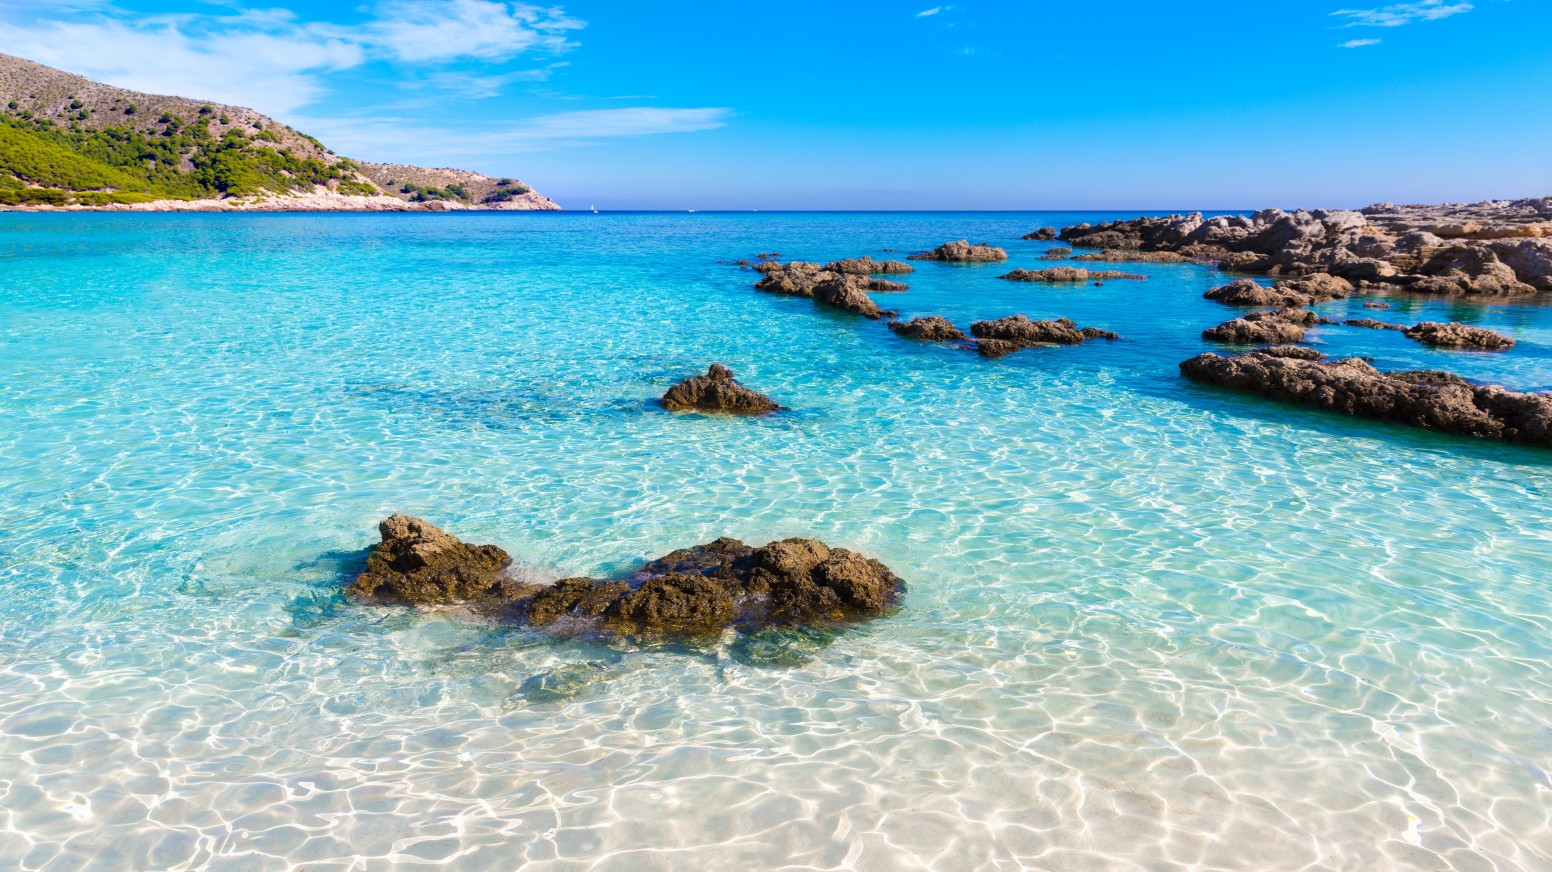 Explorando la belleza de Mallorca en invierno: un paraíso invernal esperando ser descubierto